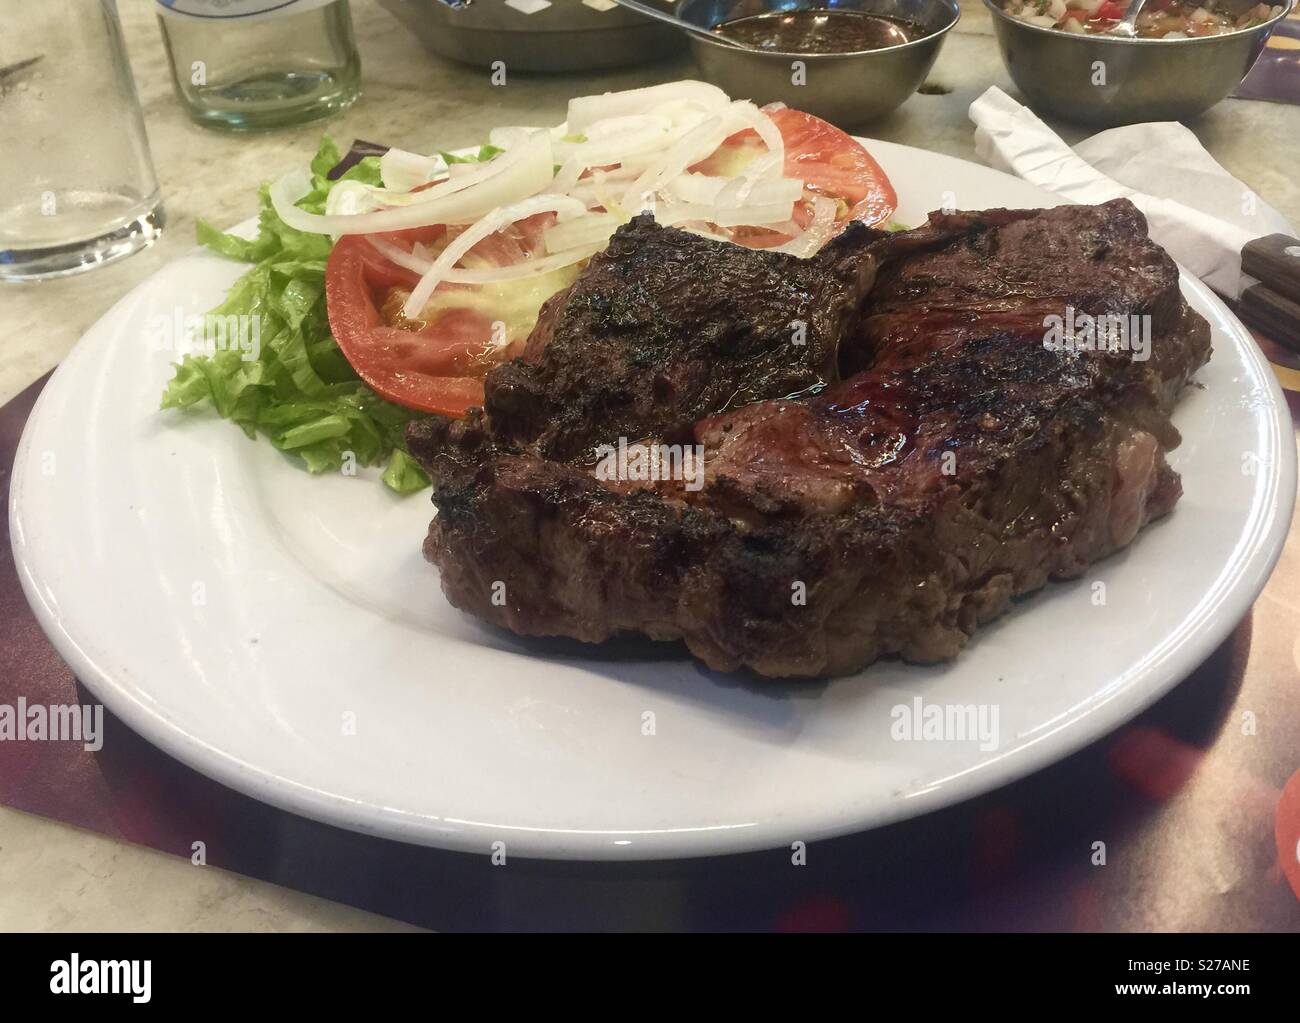 Large steak and salad Stock Photo